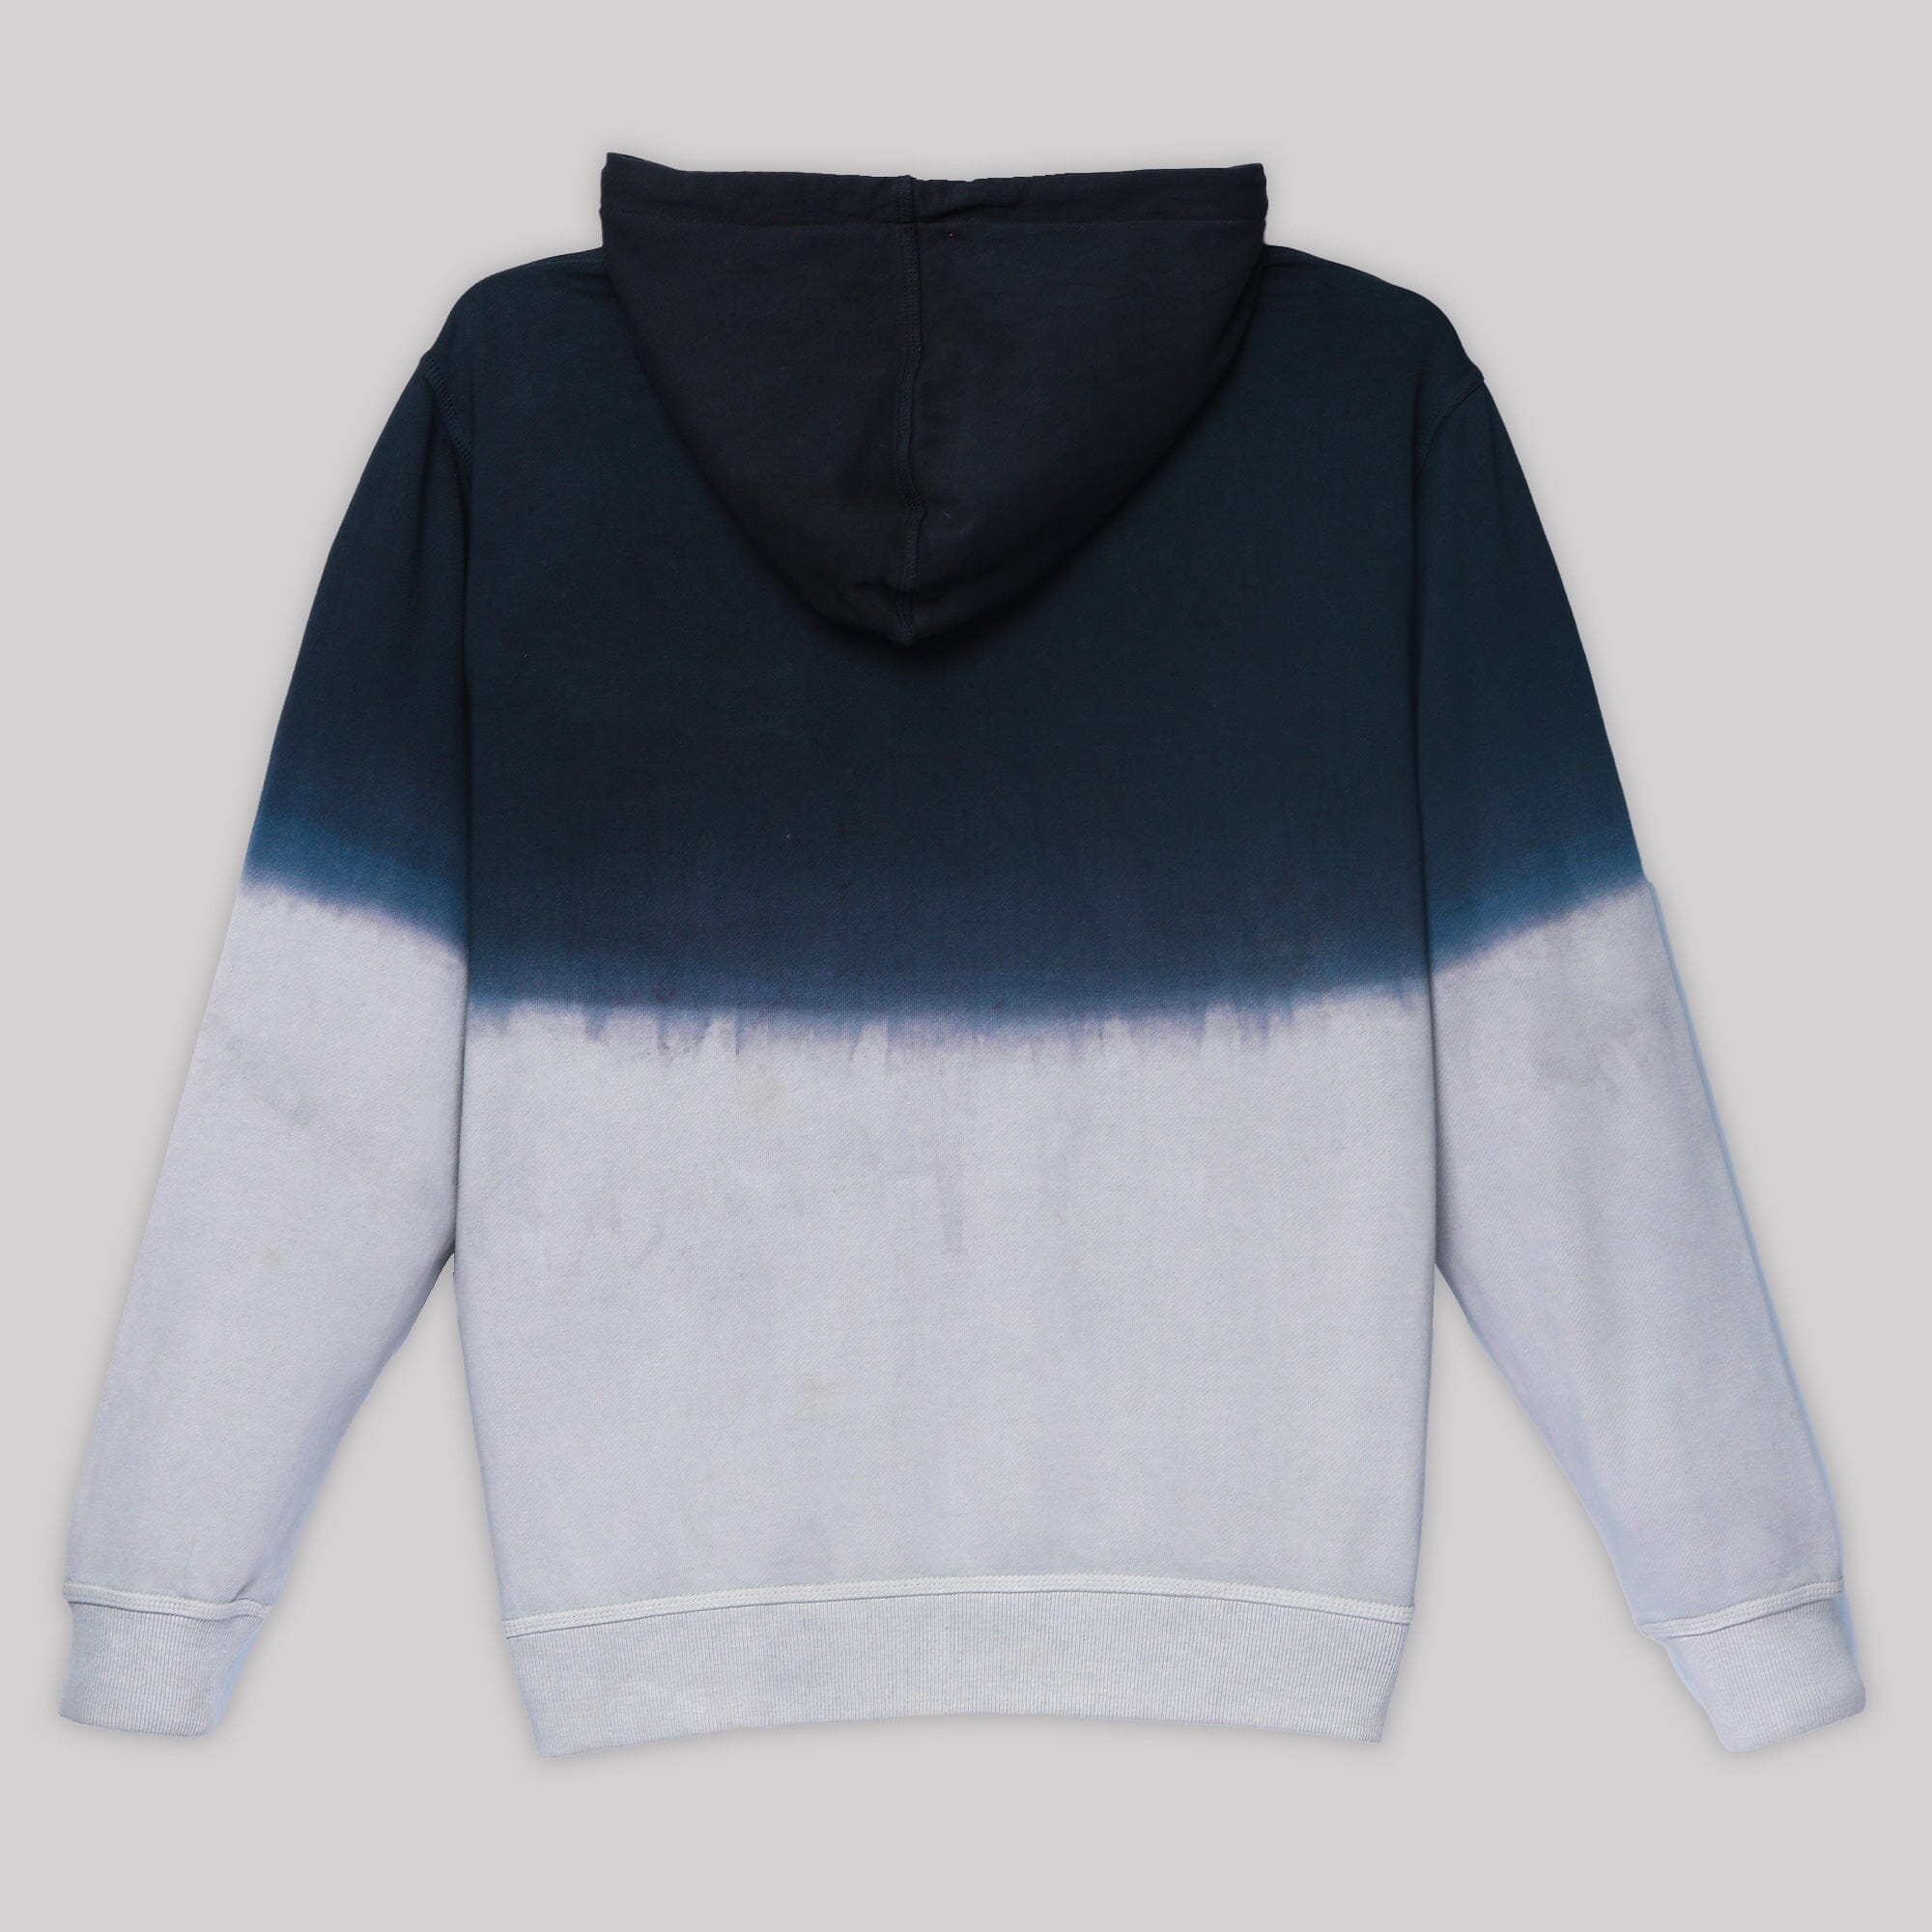  Onlypuff 3X Hoodies For Women Tie Dye Sweatshirts  Lightweight Sweatshirt Ombre Gradient Tunic Top Blue 3XL